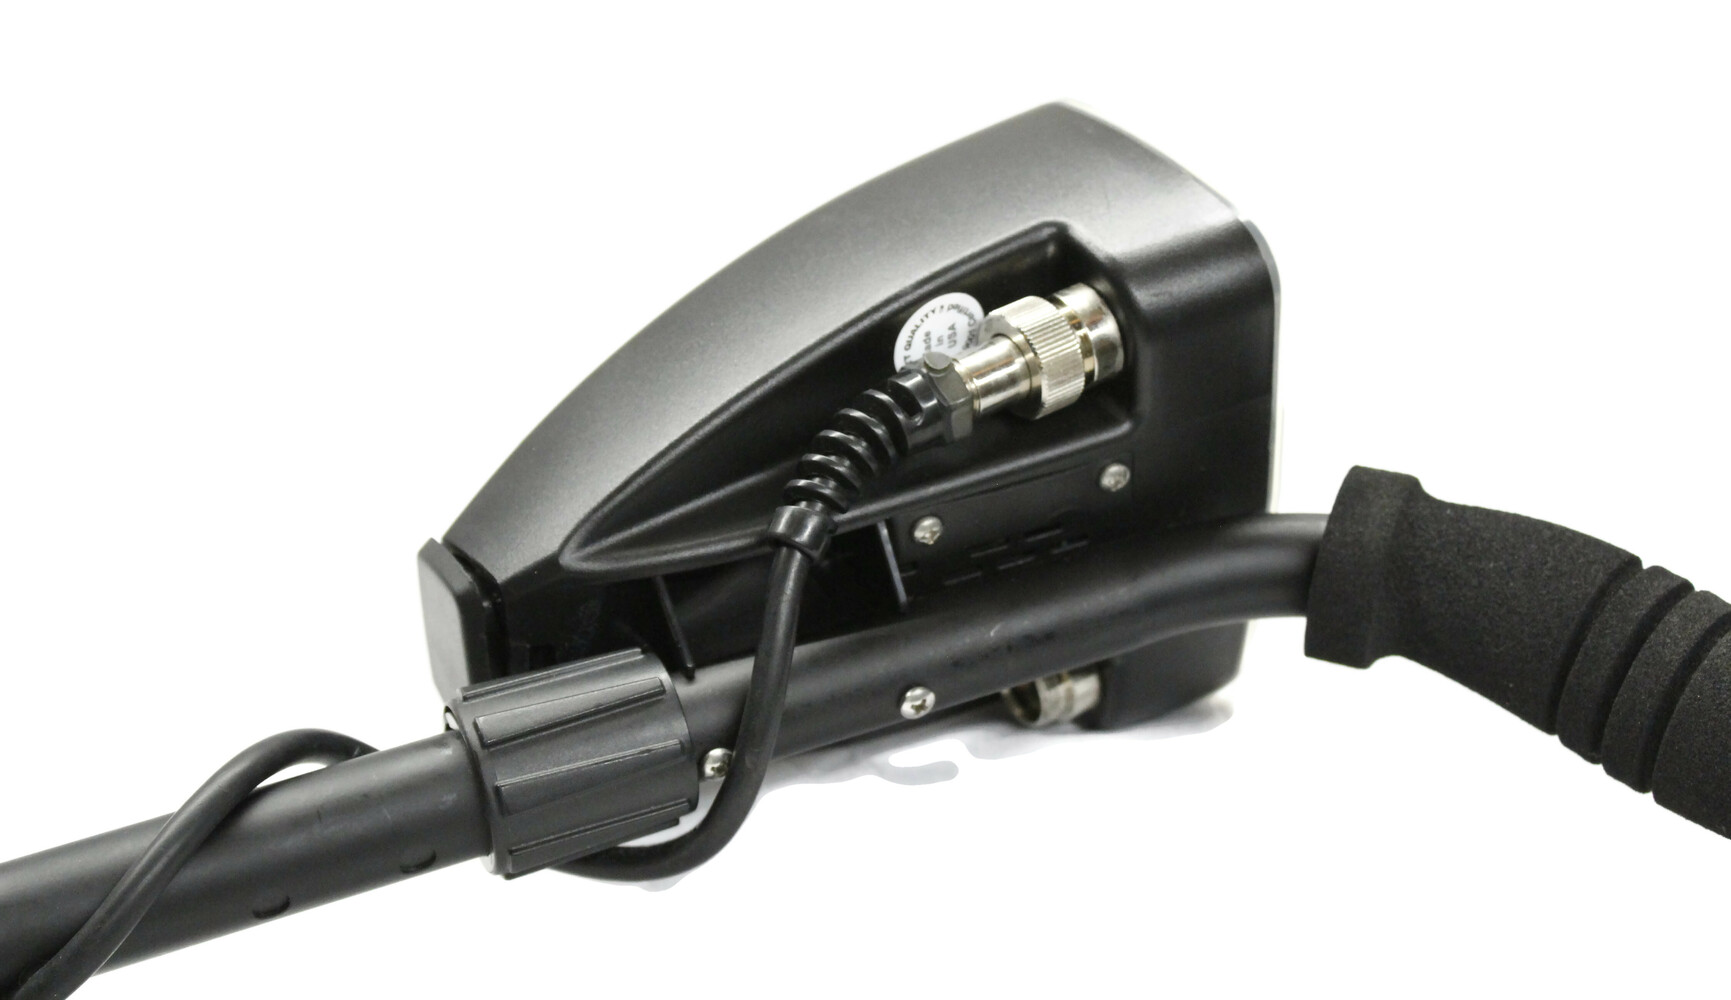 Garrett AT Pro Metal Detector Kit W/ Pin Pointer, Shovel And Headphones. 